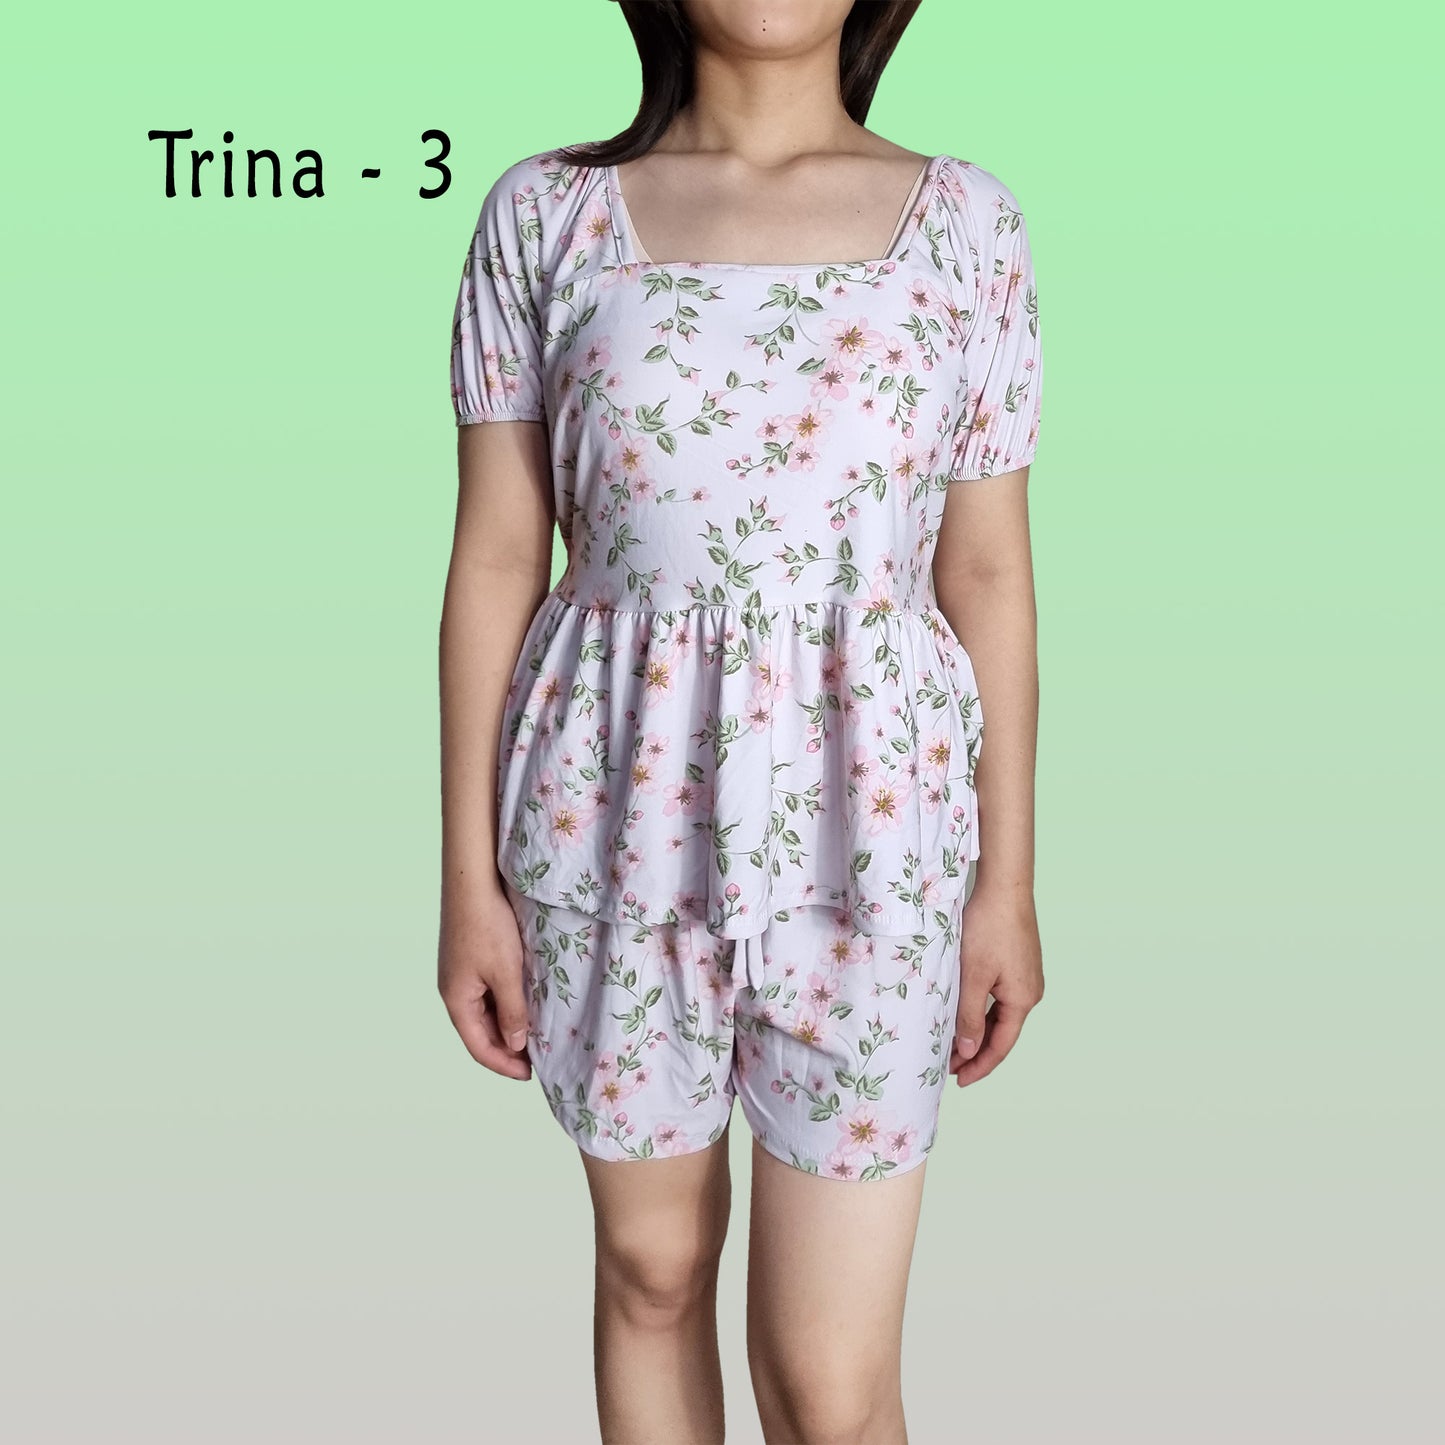 Trina Pregnancy, Maternity Terno - Blouse and Shorts Sets